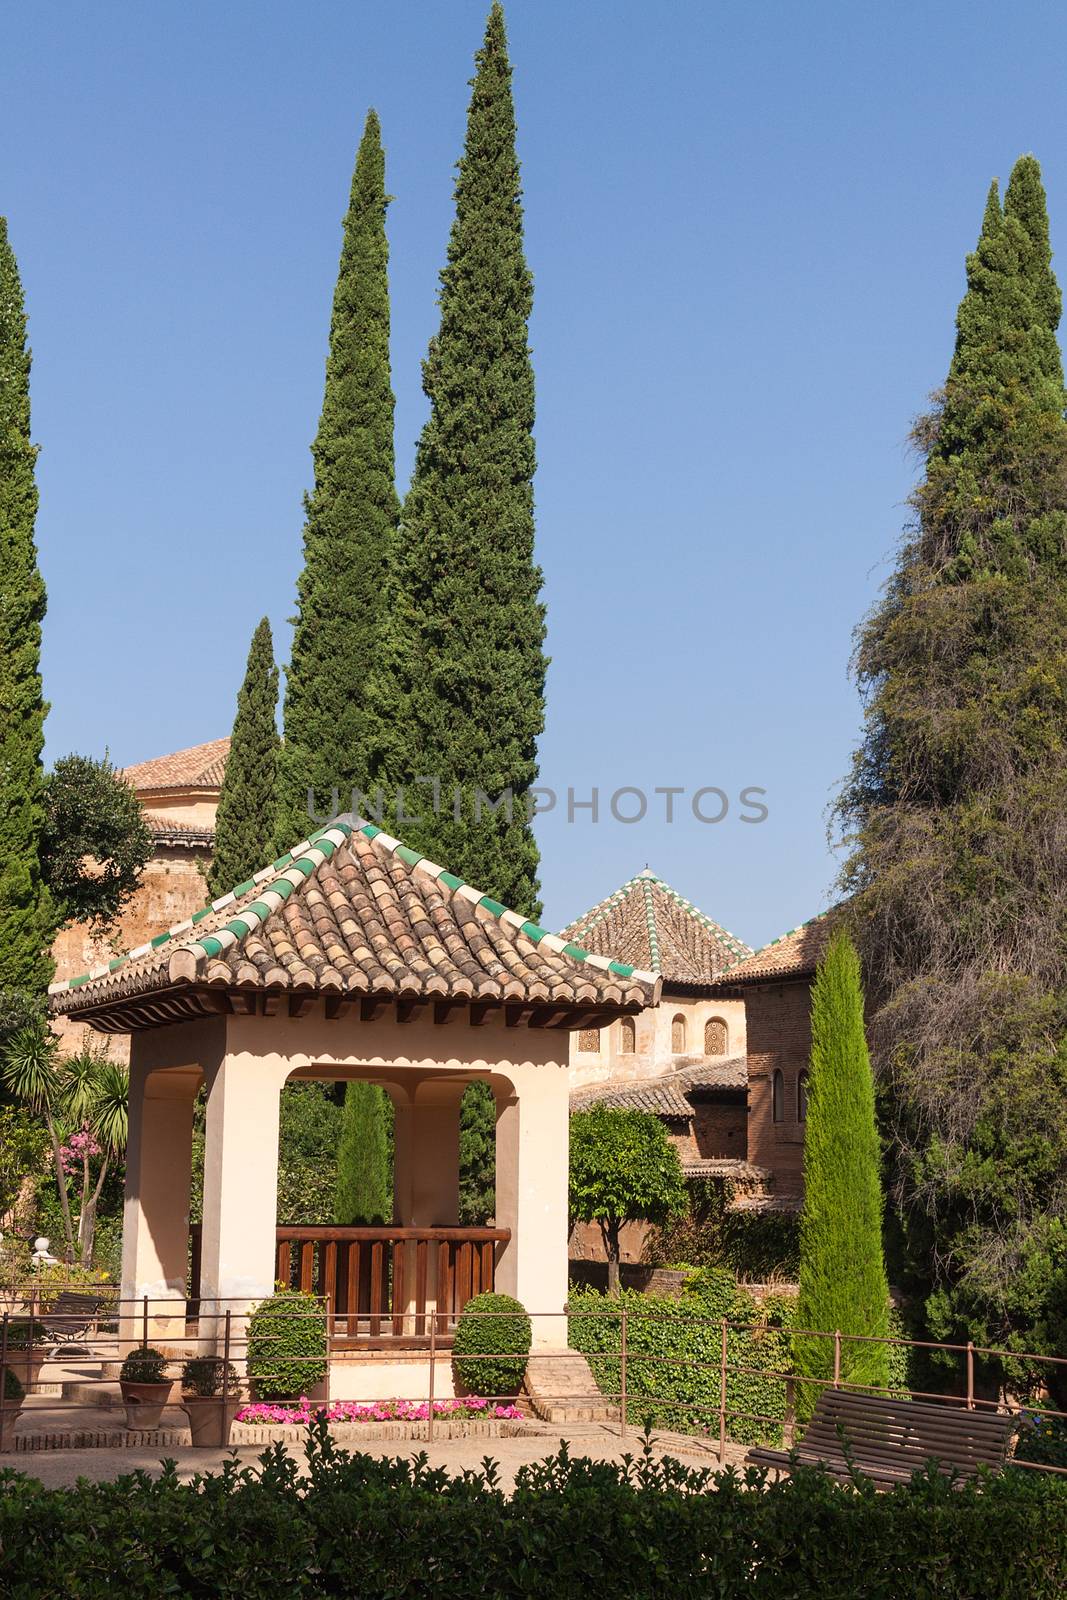 Arbour in Heneralife gardens, Alhambra, Spain by serpl